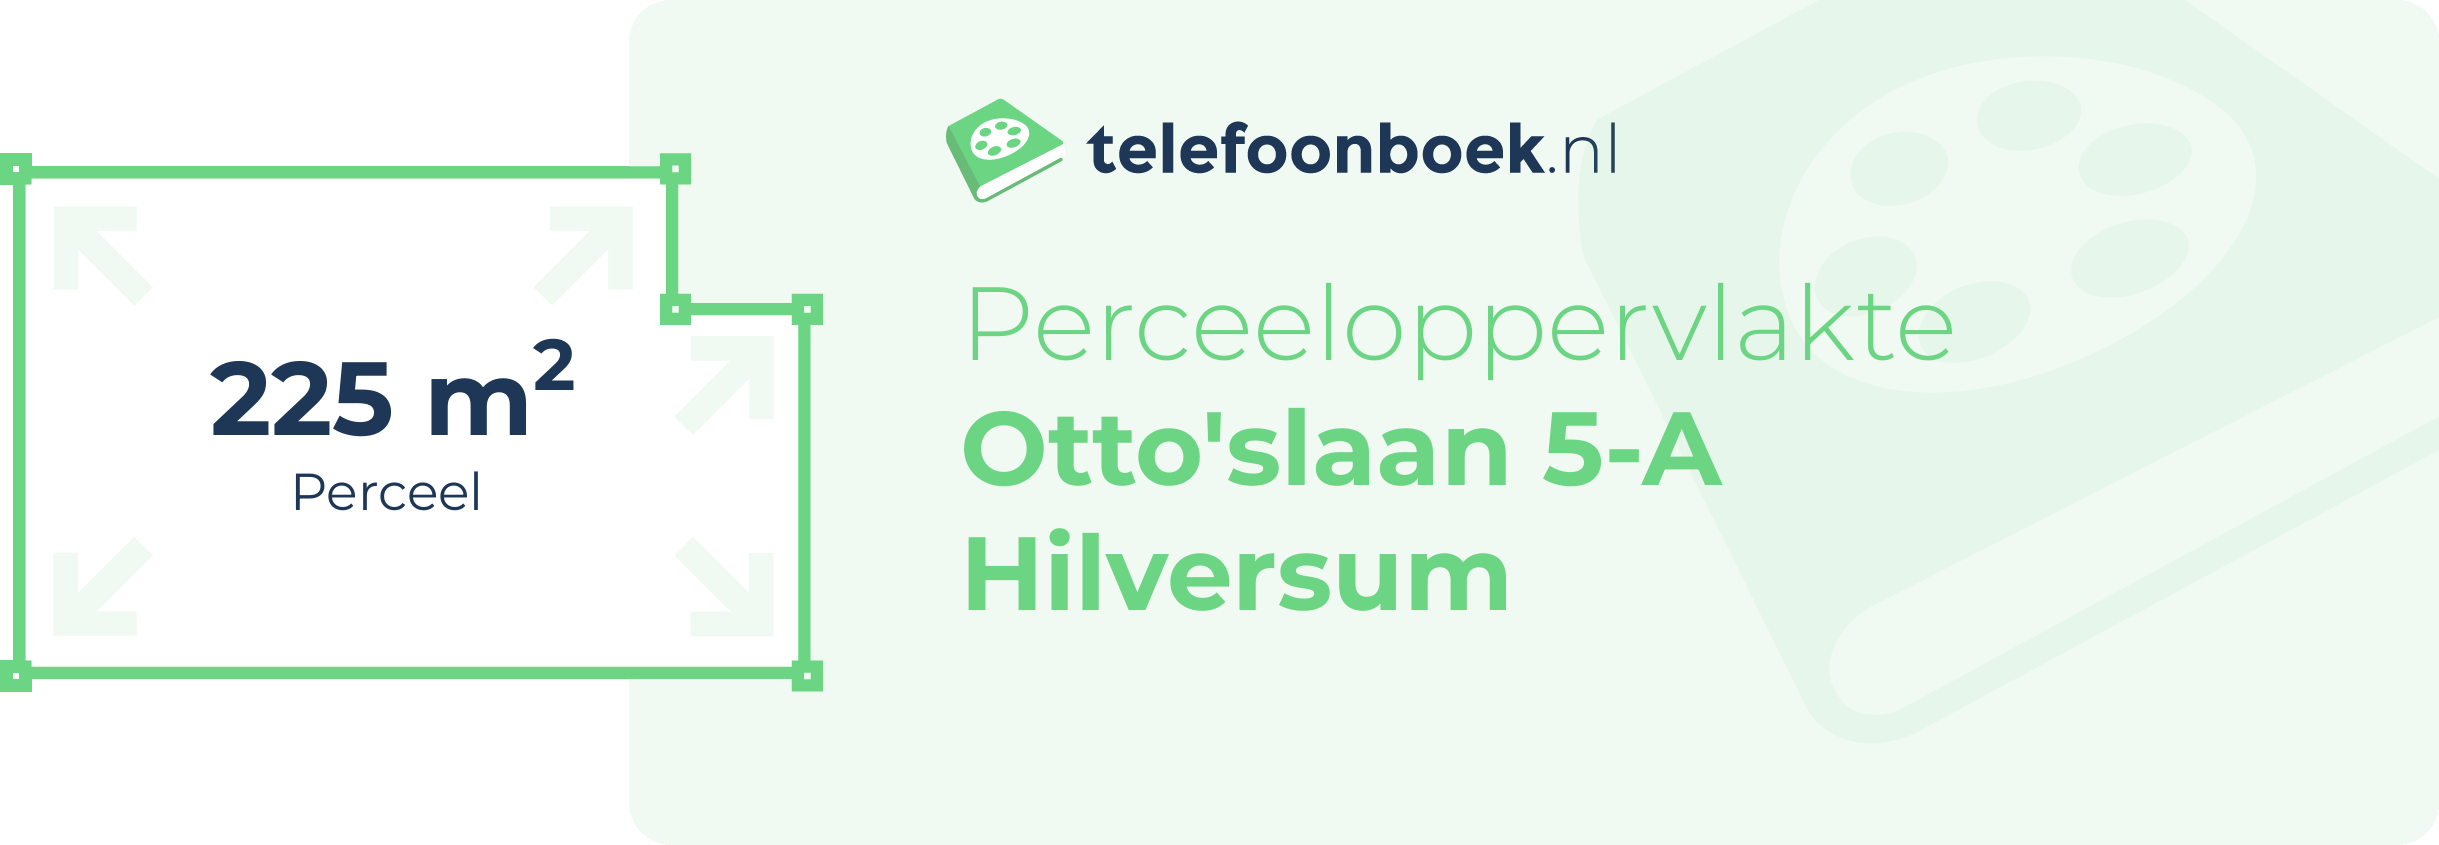 Perceeloppervlakte Otto'slaan 5-A Hilversum